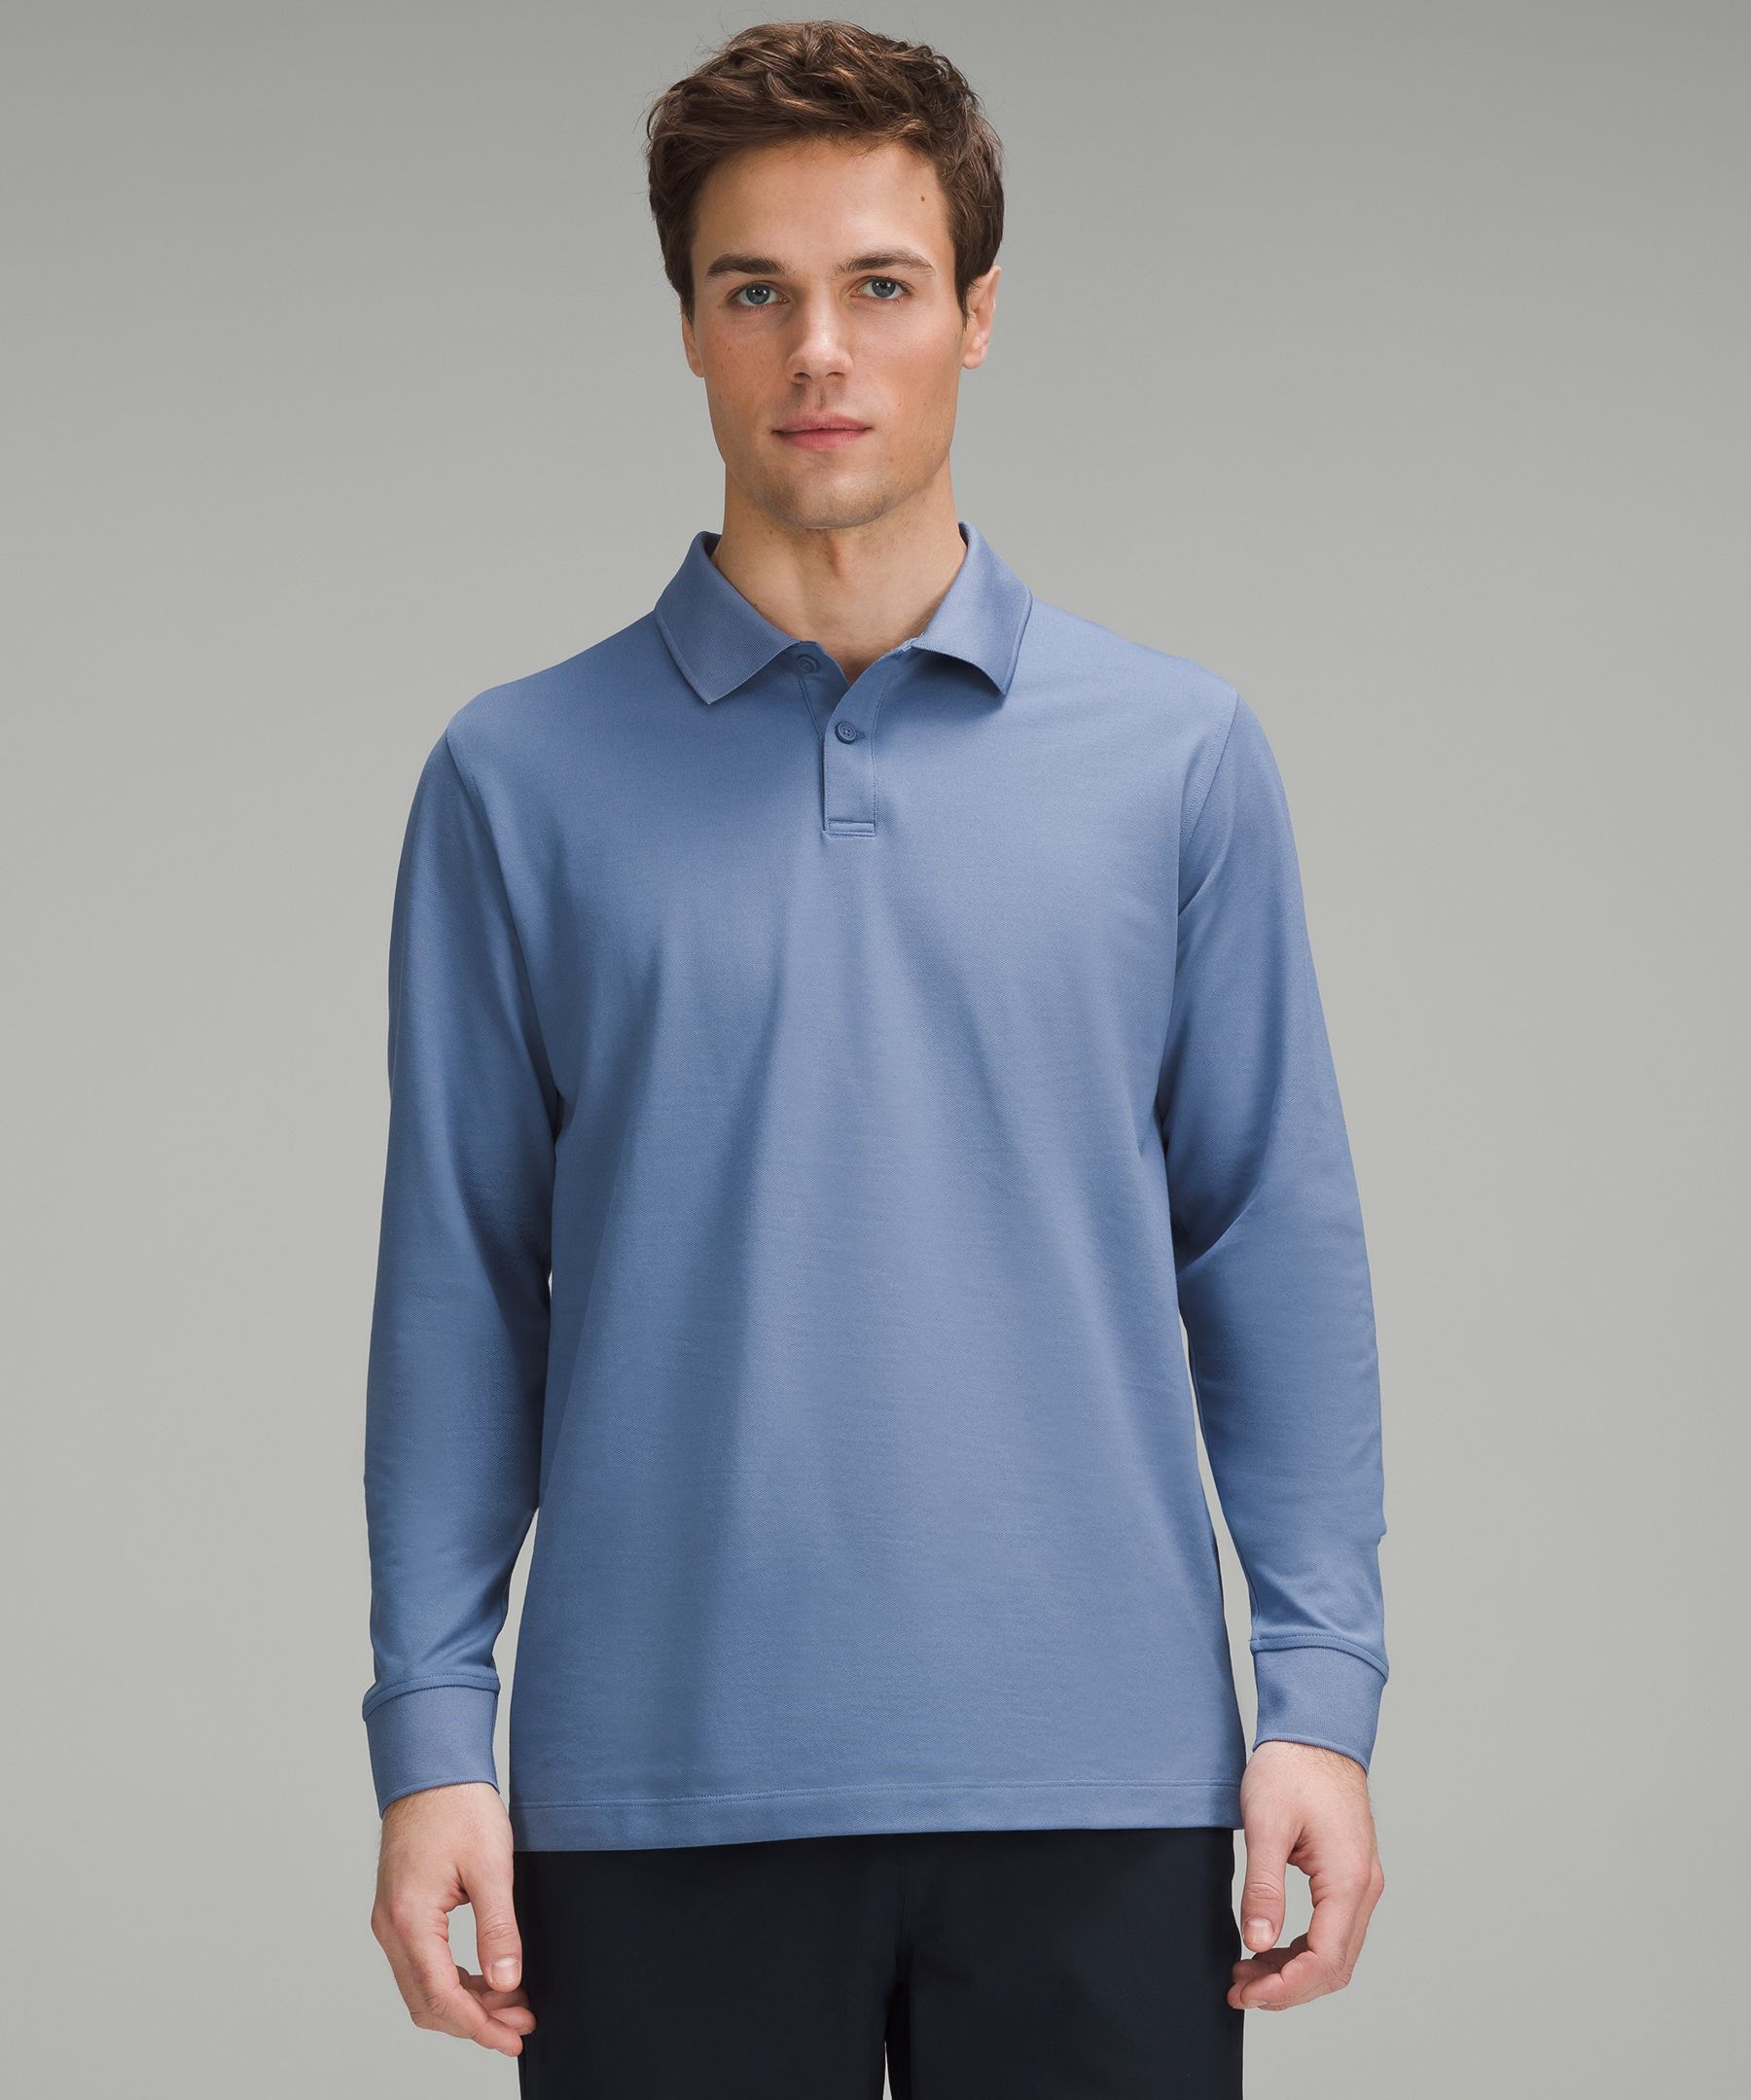 Lululemon Classic-fit Pique Long-sleeve Polo Shirt